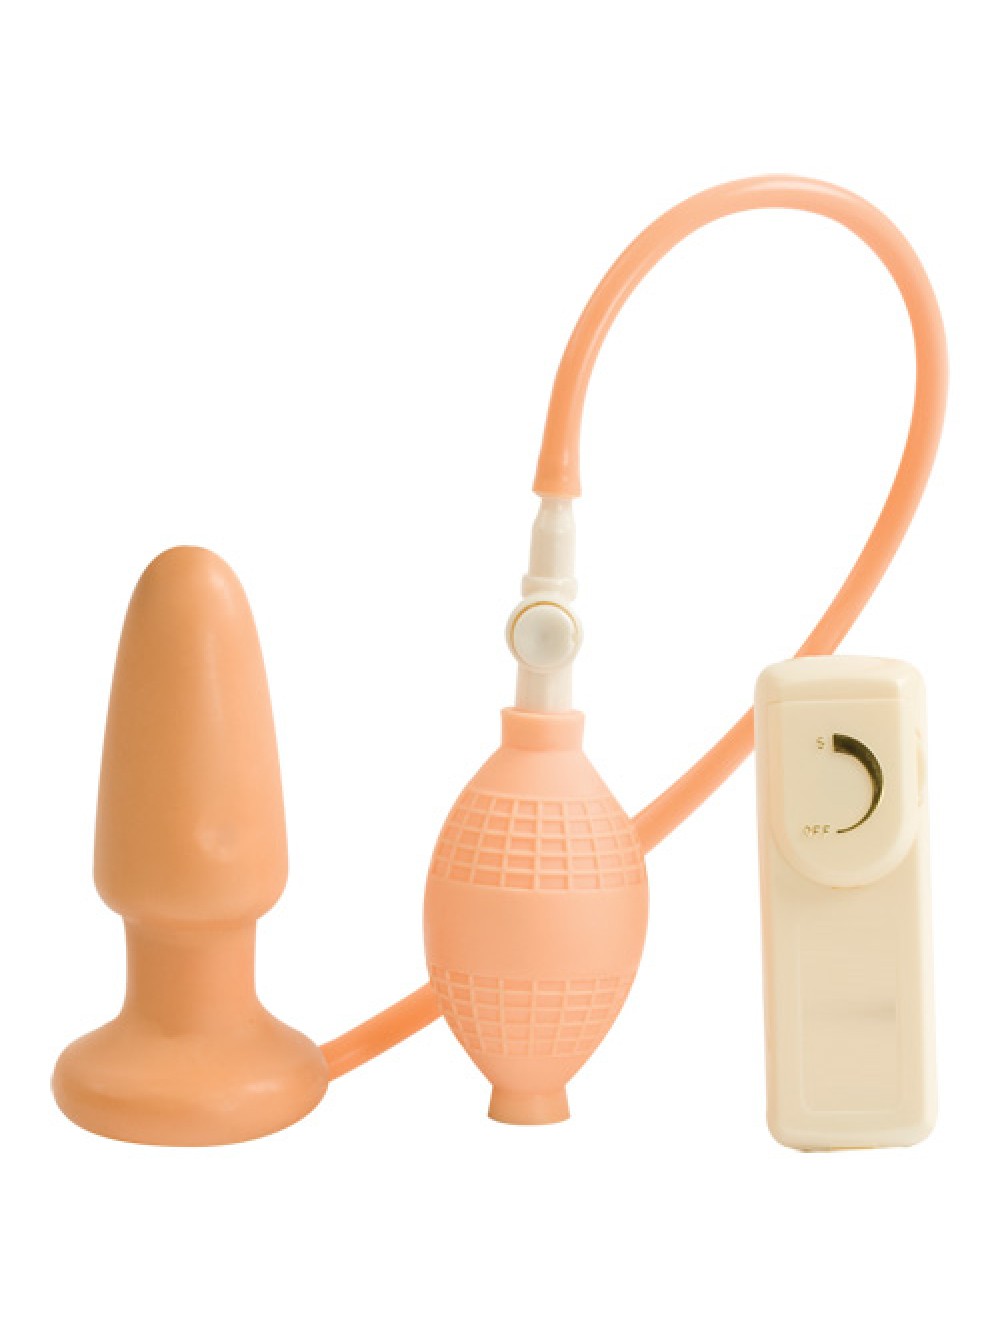 Inflatable Vibrating Flesh Butt Plug 4890888719912